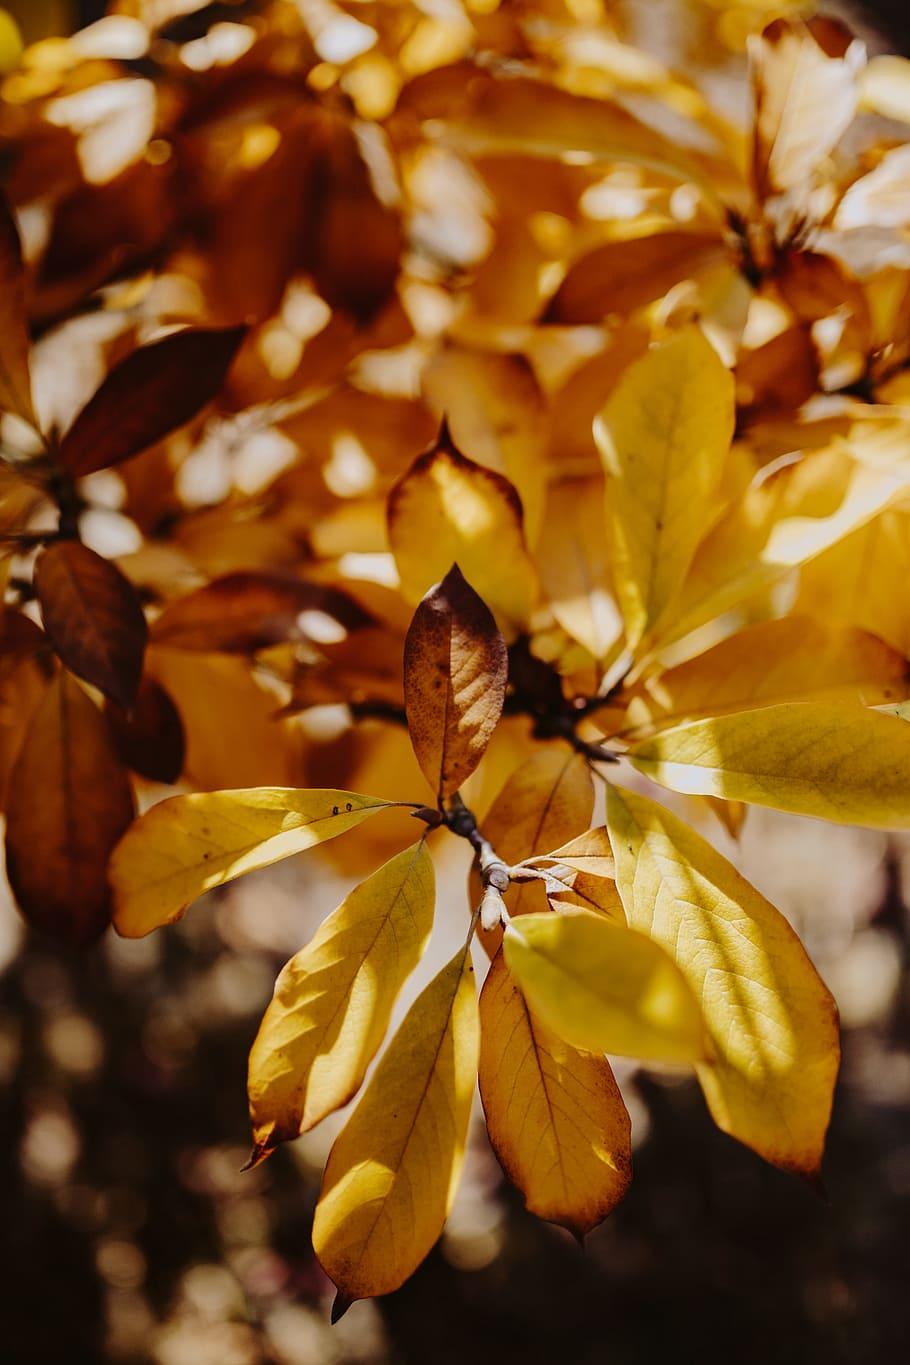 HD wallpaper: Yellow leaves of magnolia in autumn, orange